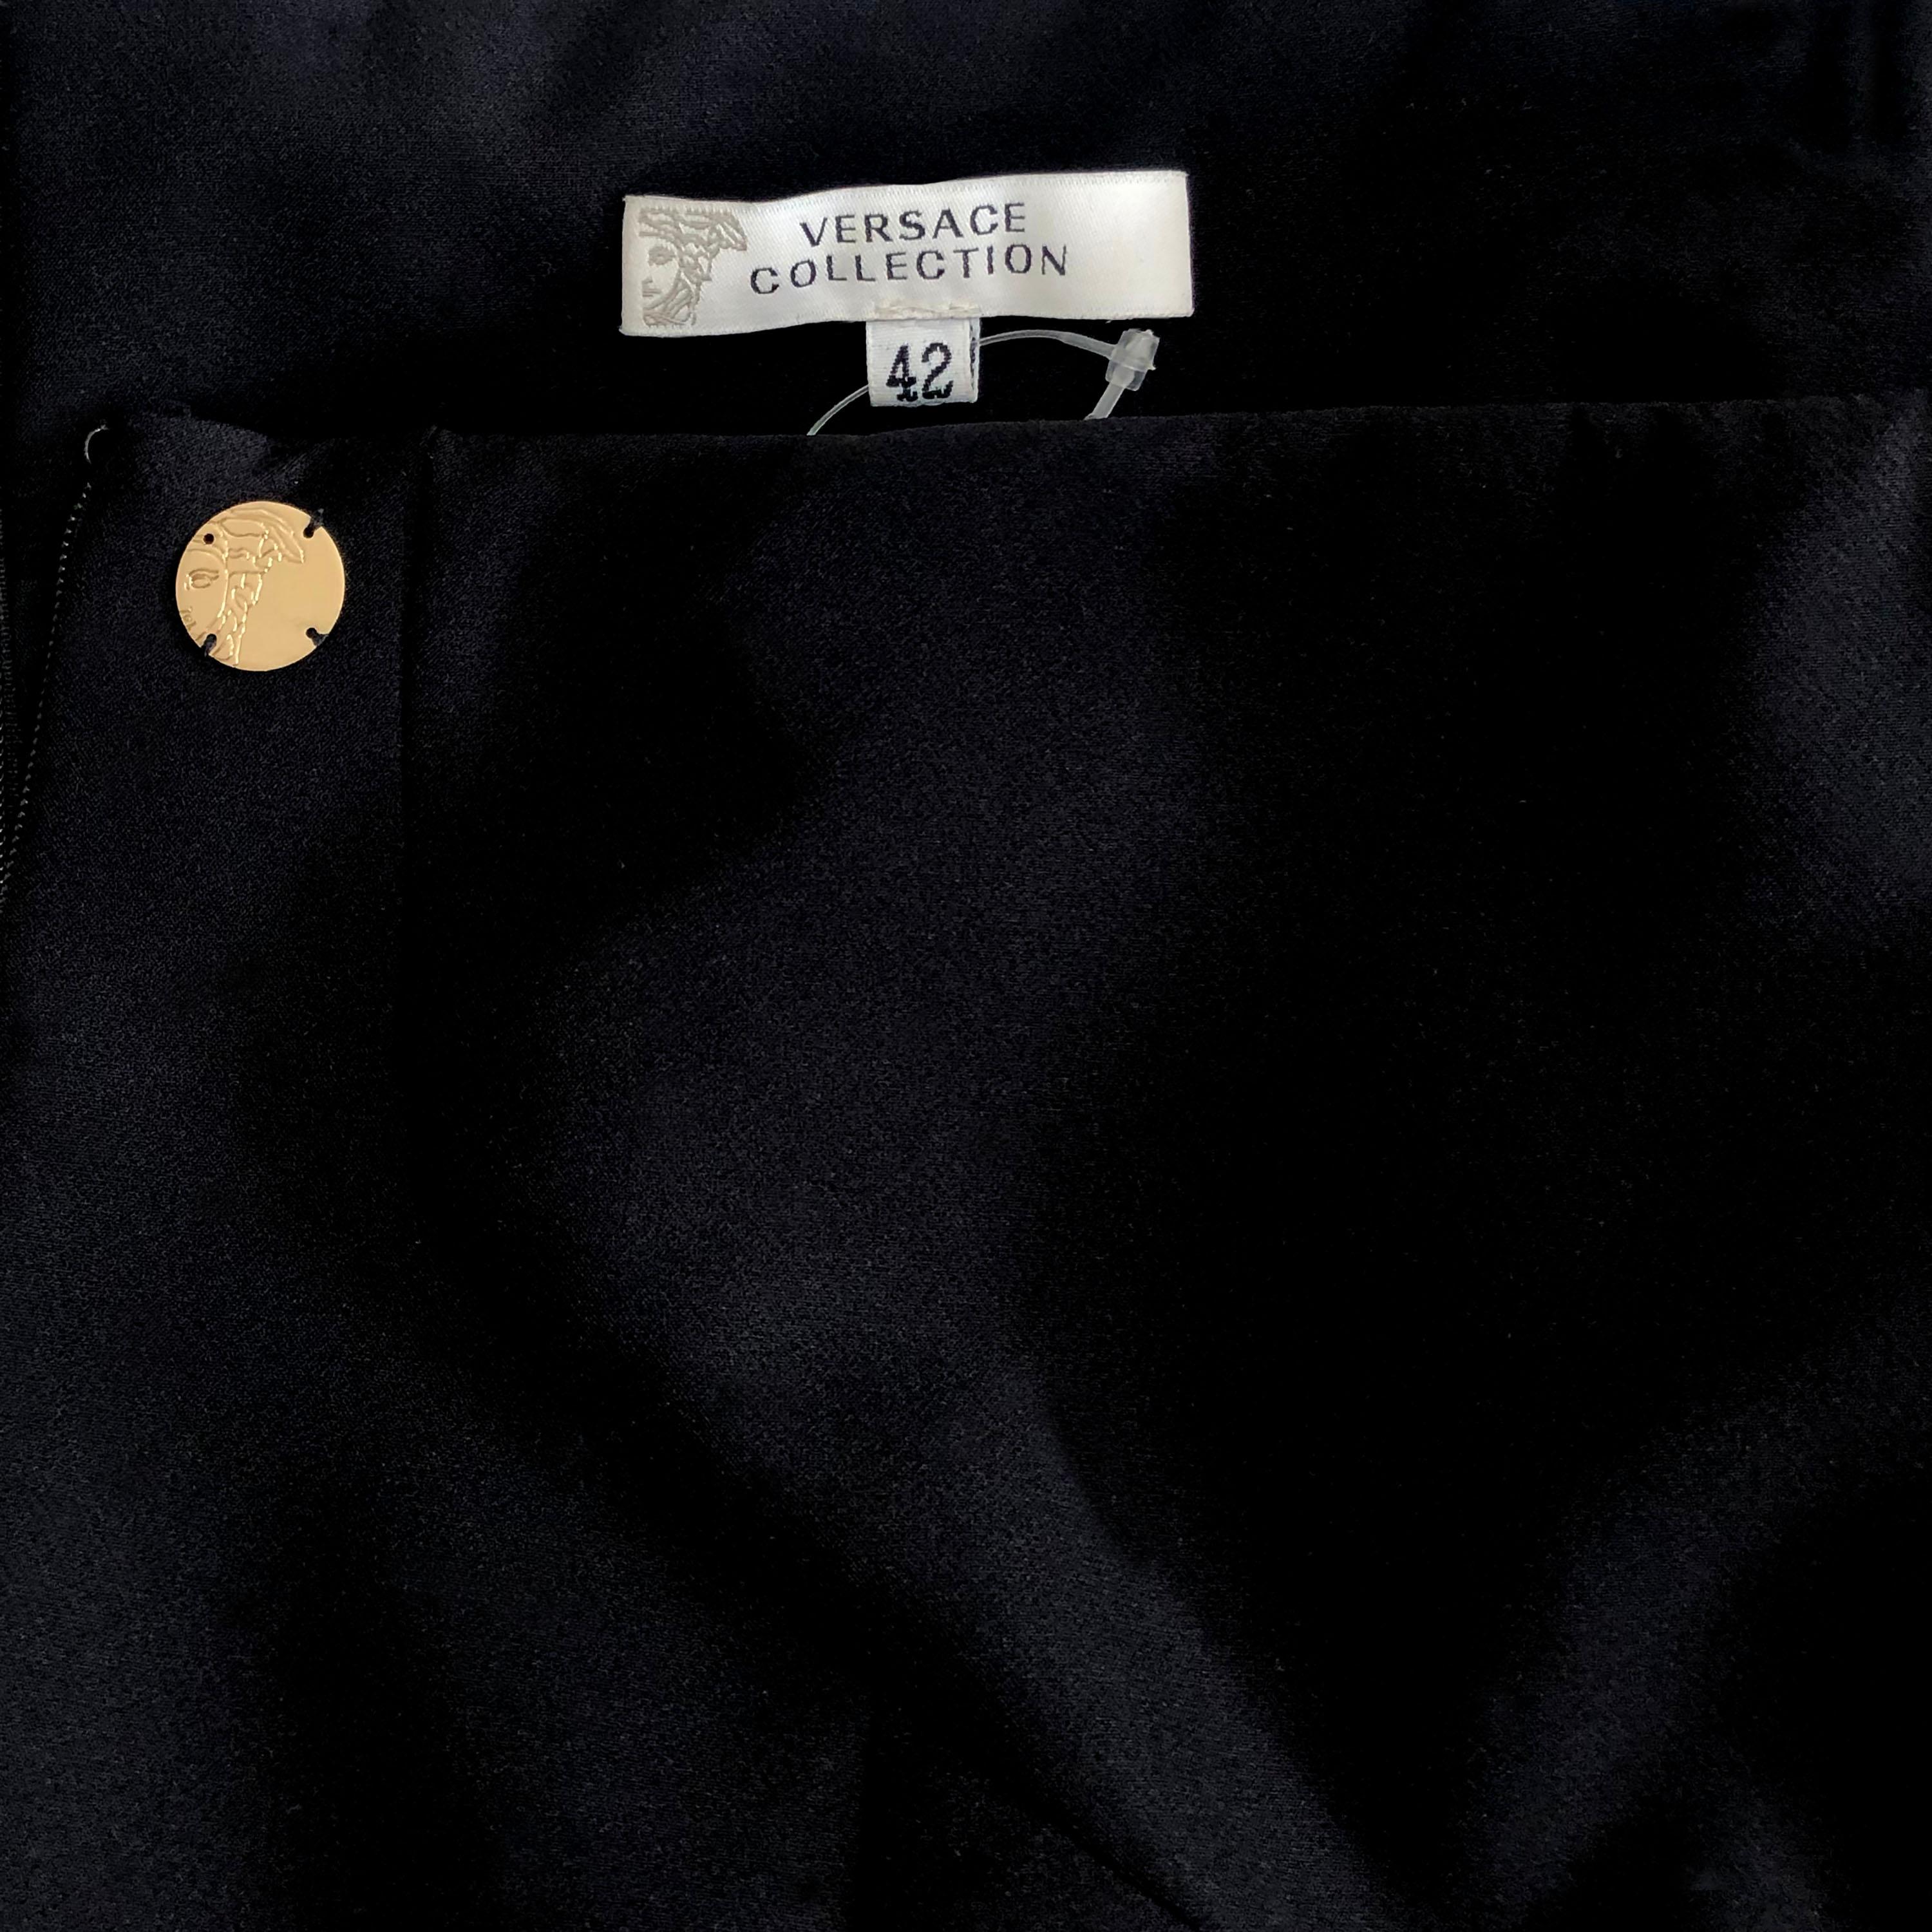 Versace Collection Skirt - Brass Stud Detailing - Black Stretch Viscose 1